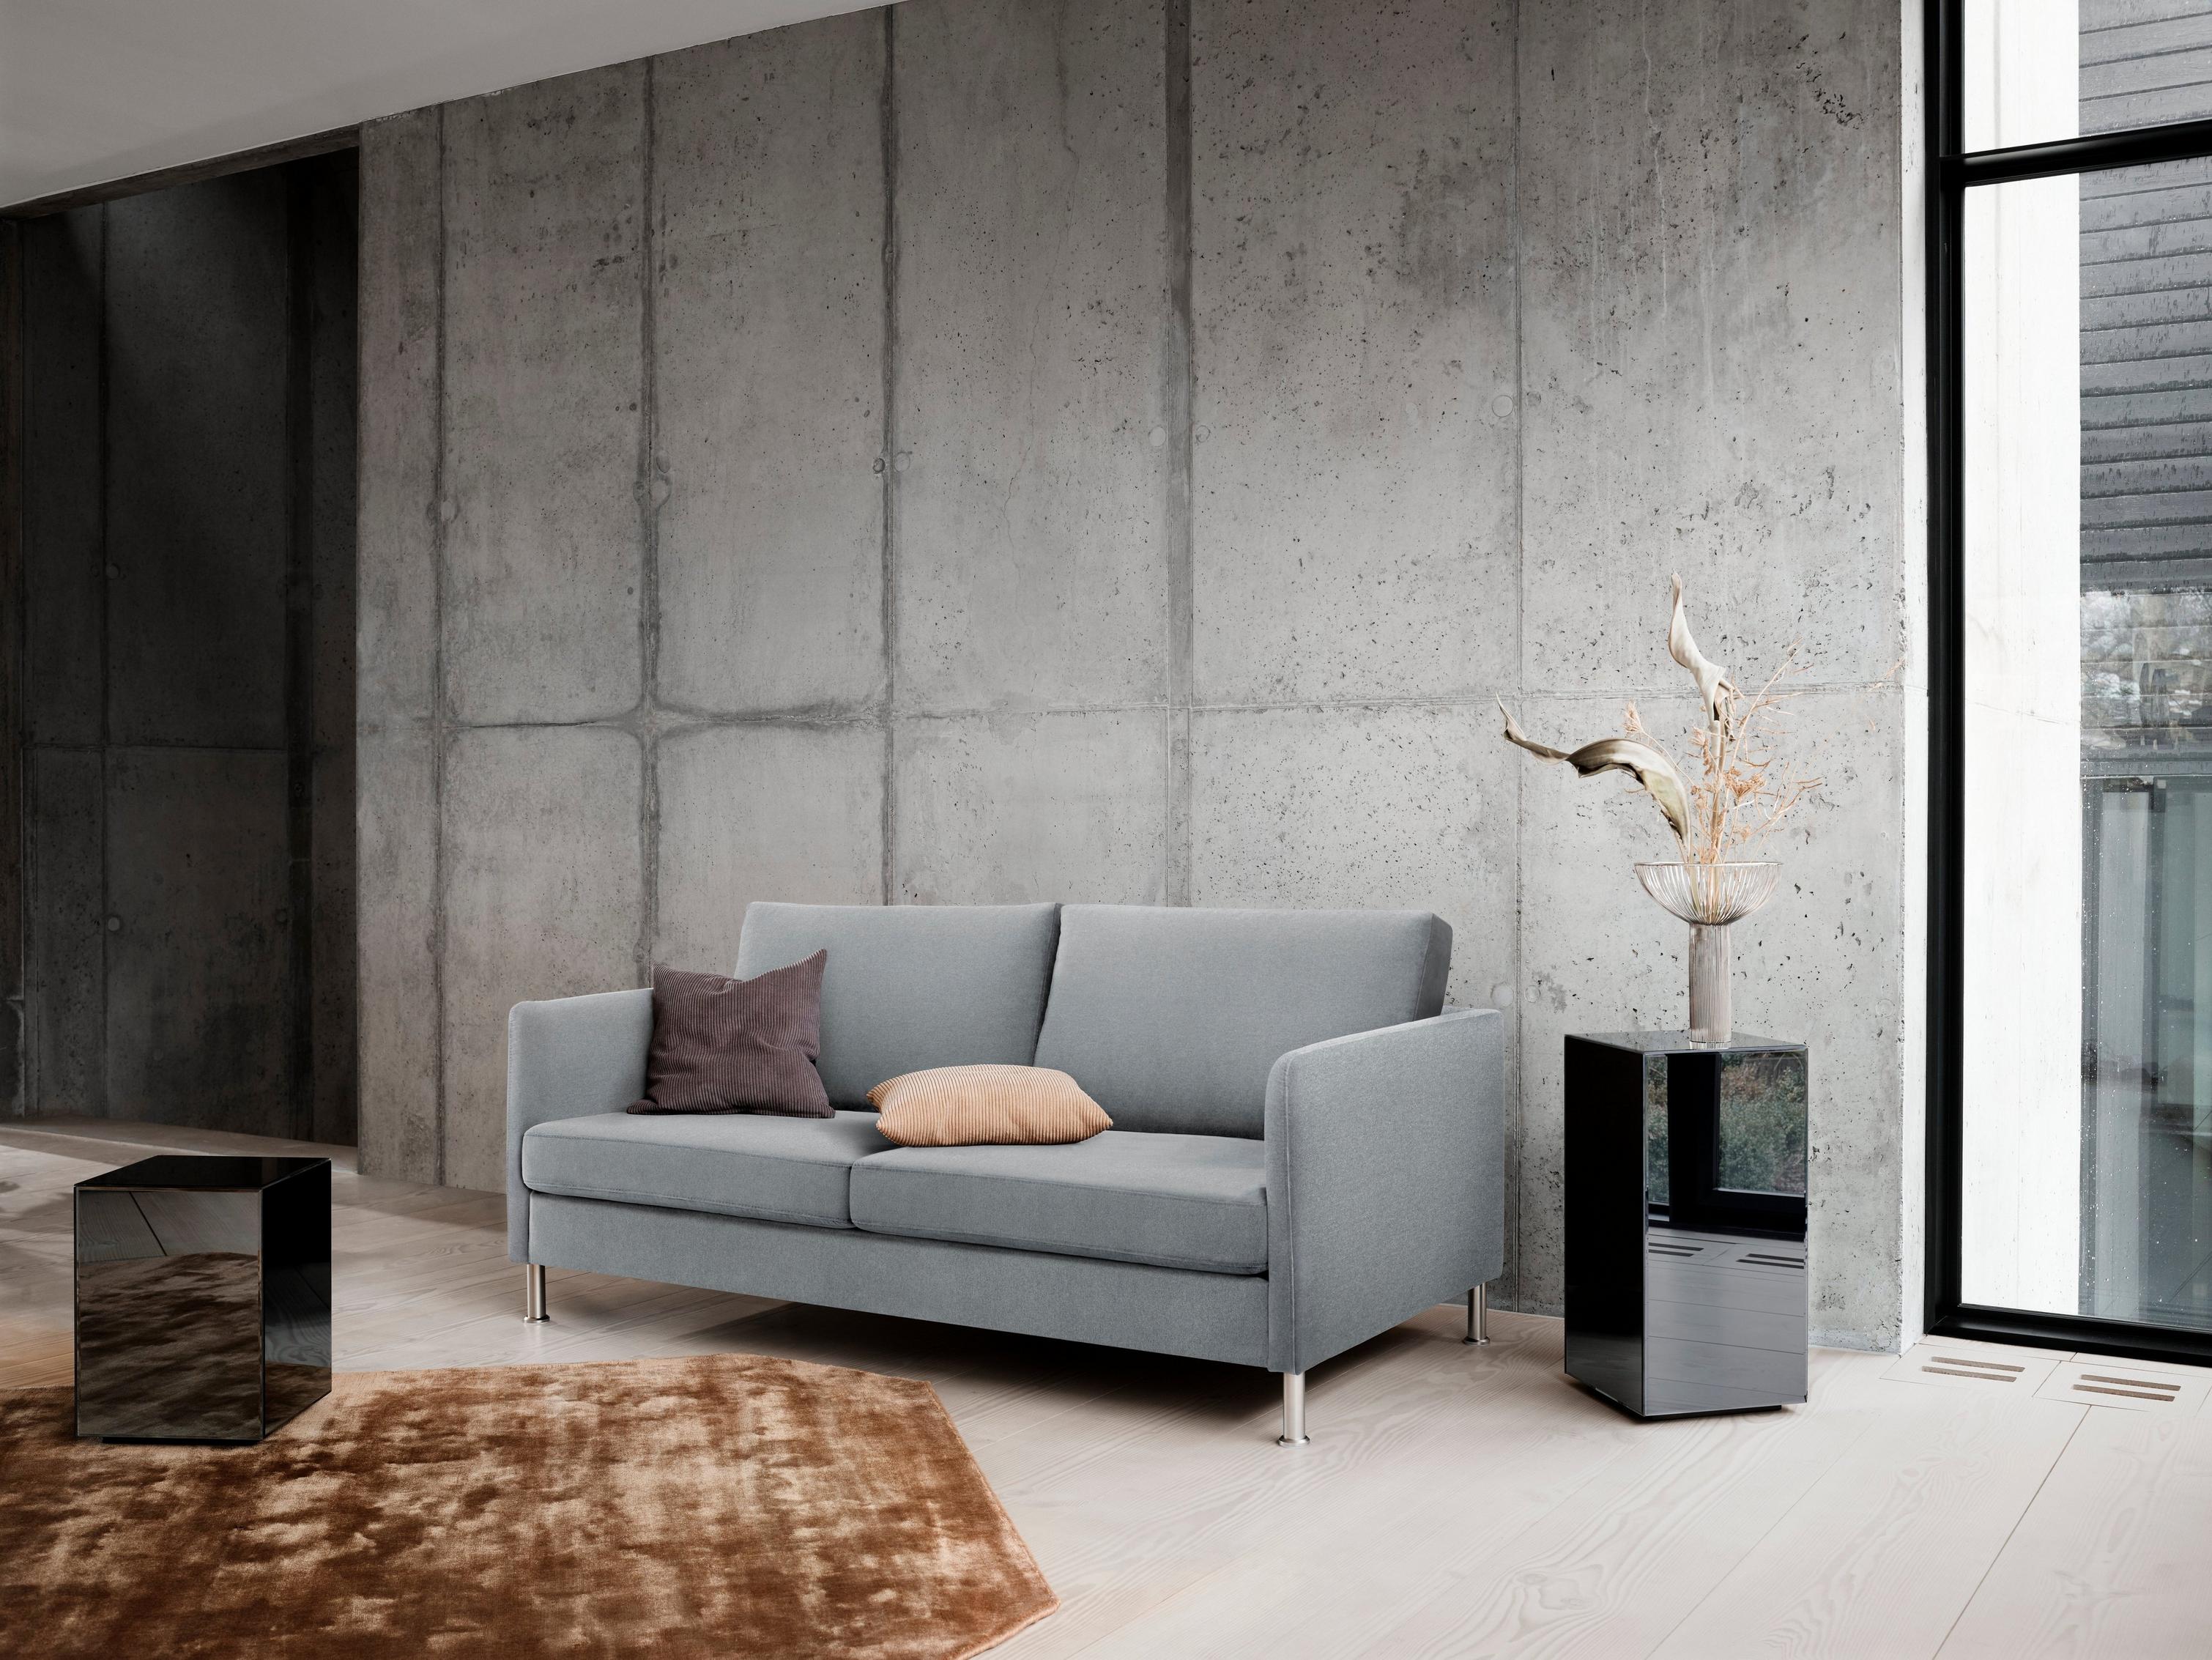 I.D.V. ソファ | デンマークデザインの家具 | ボーコンセプト